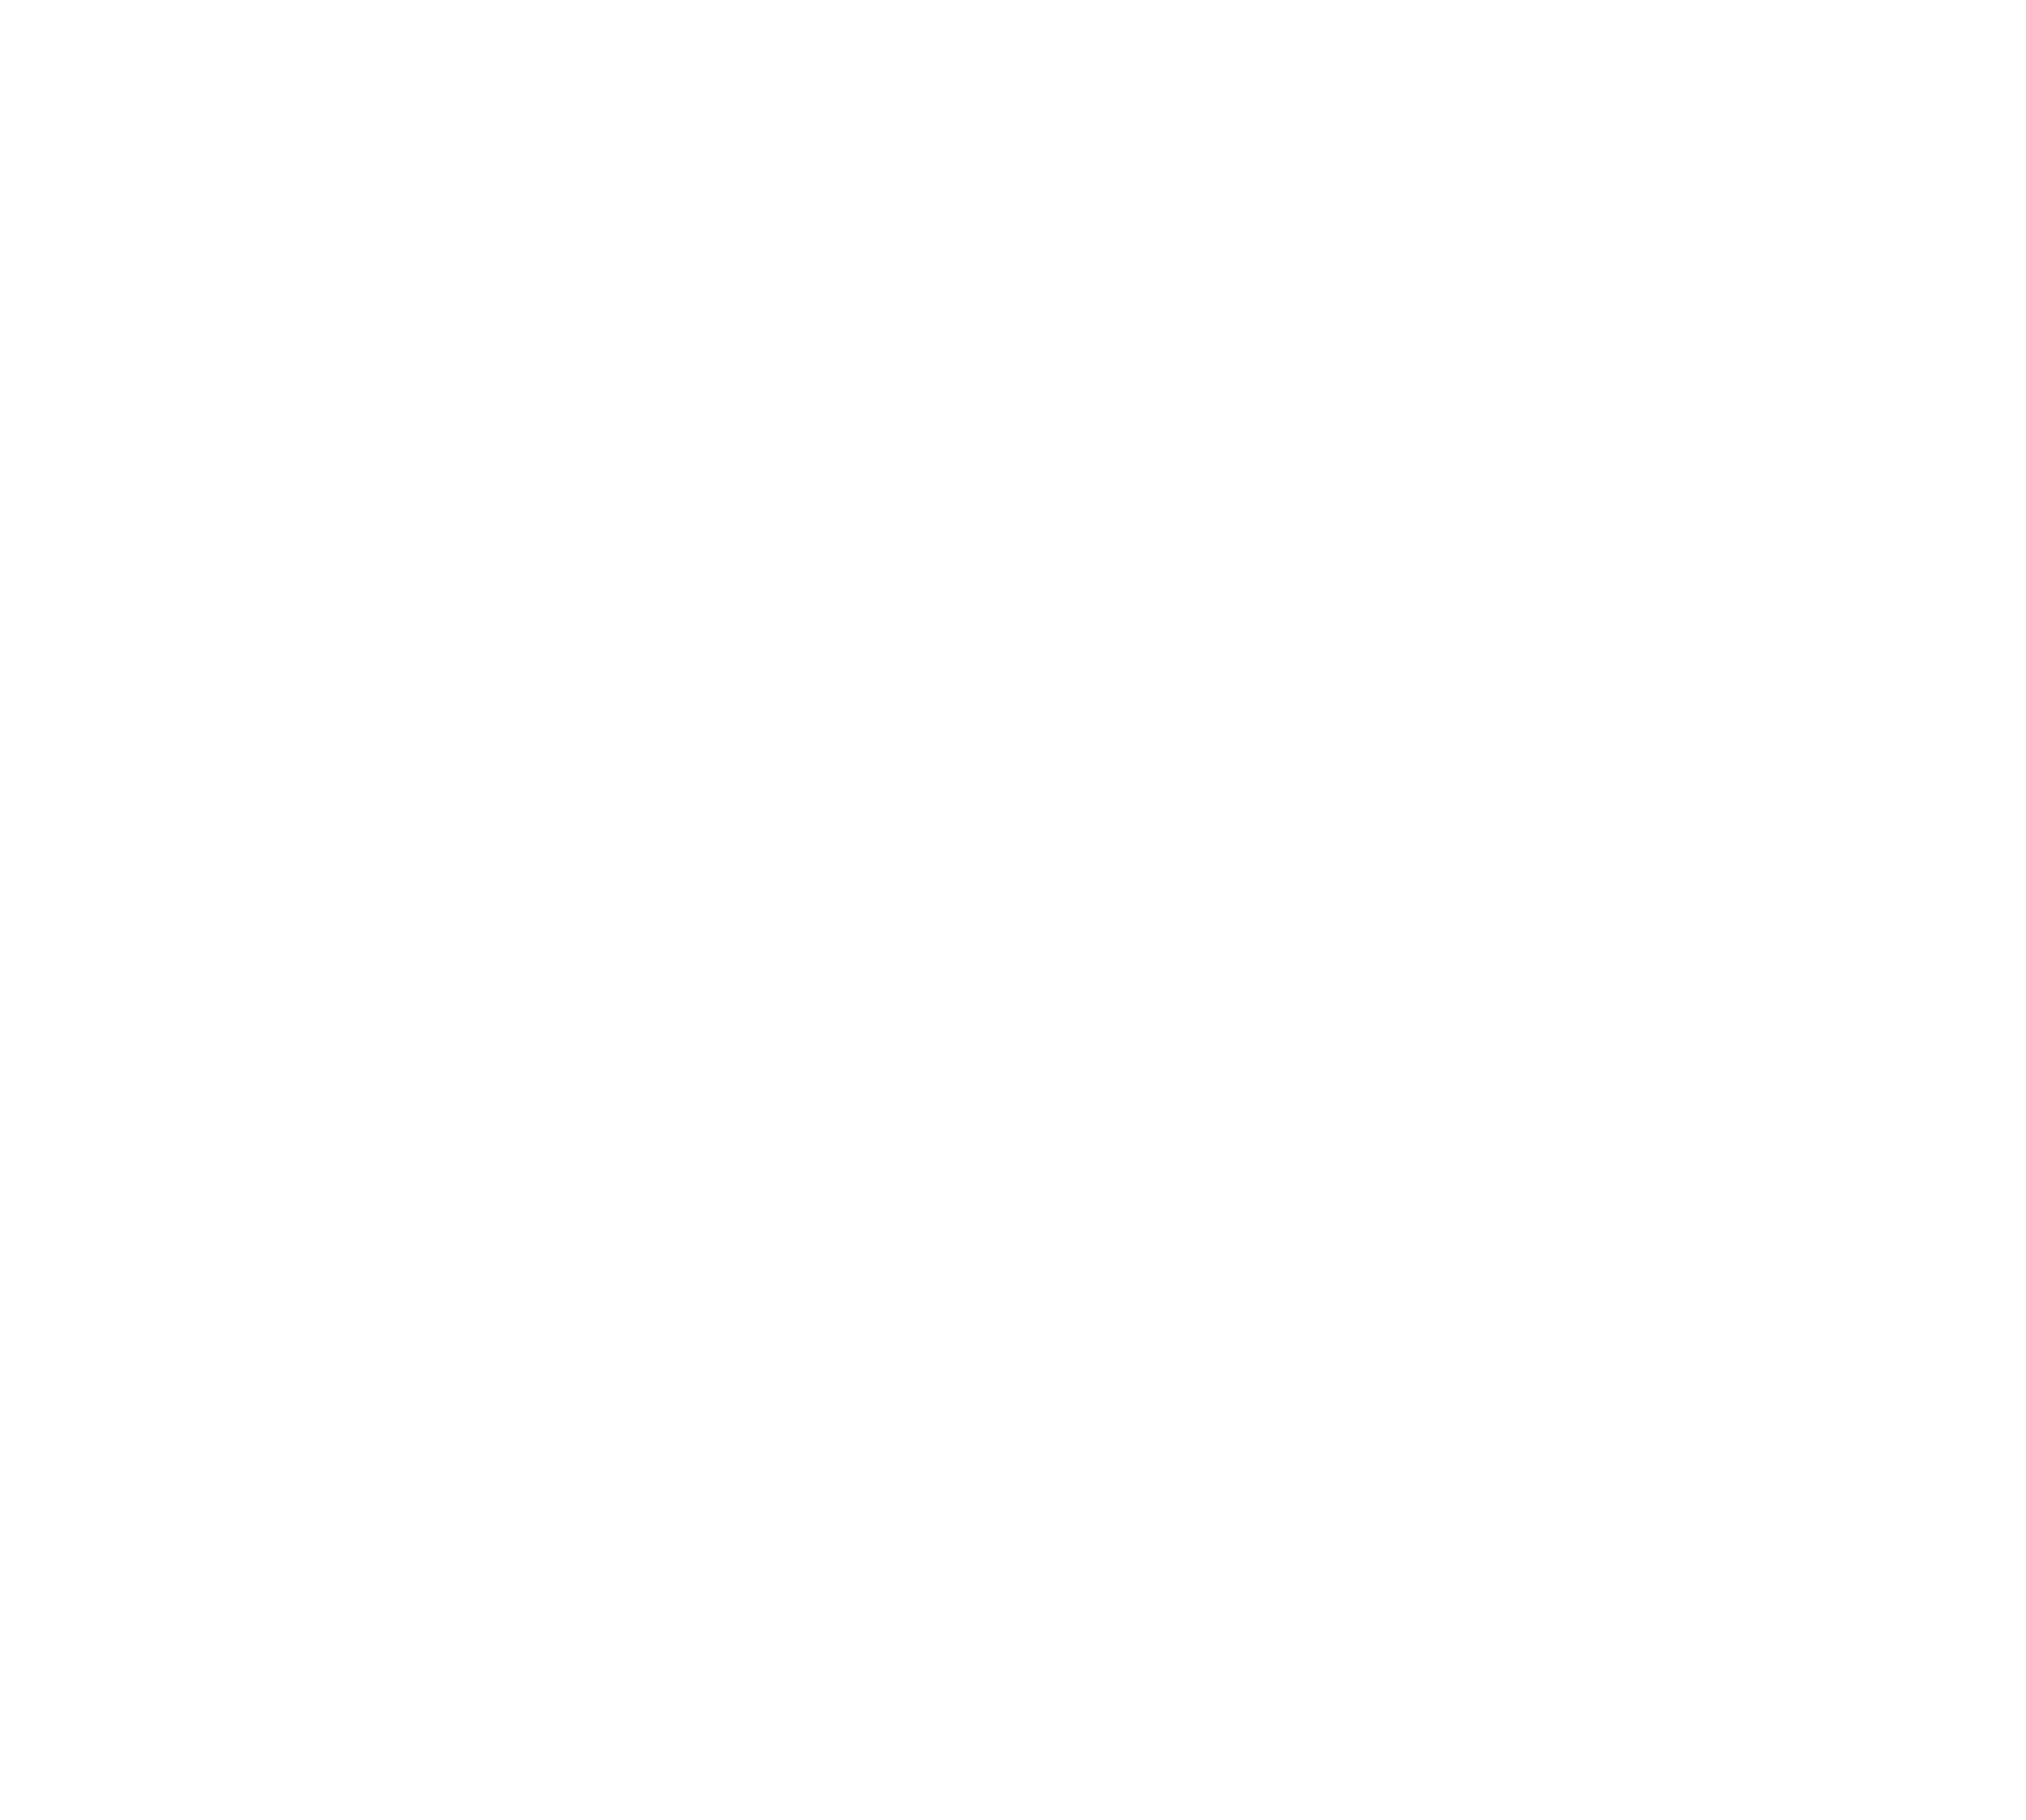 HUCK LIFESTYLE